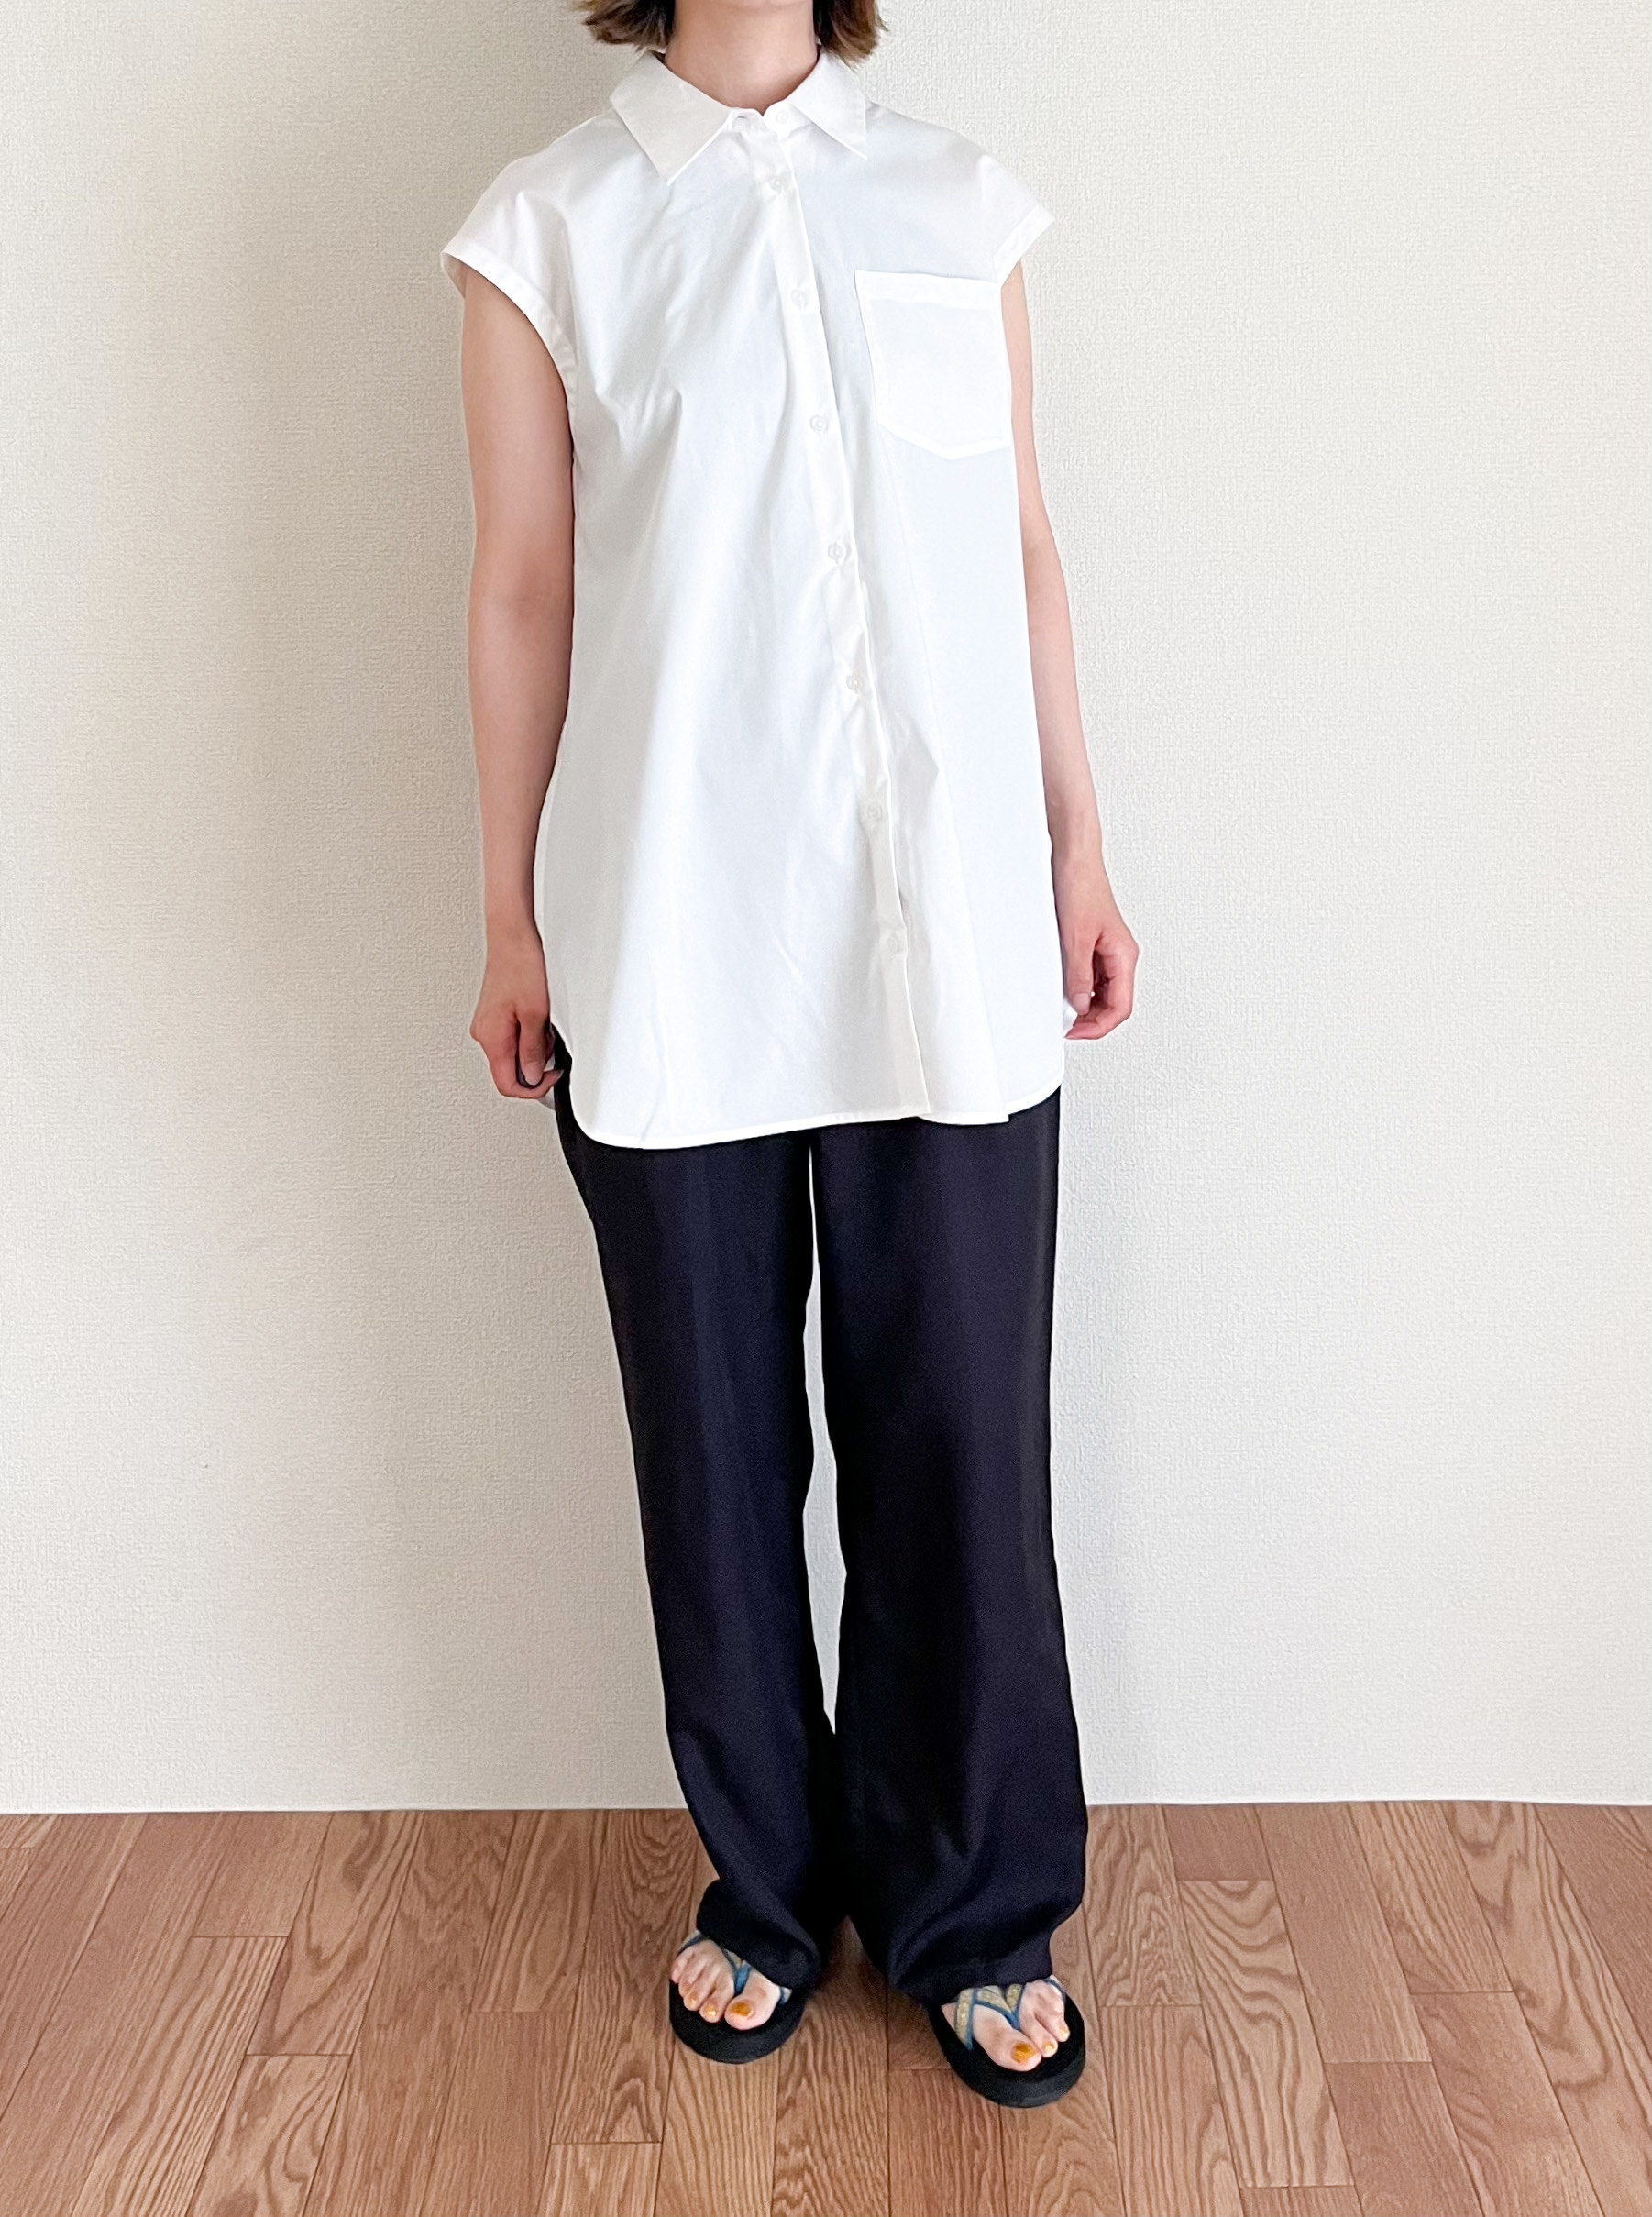 GU（ジーユー）のおすすめファッションアイテム「フレンチスリーブチュニックシャツ(半袖)RS+X」、